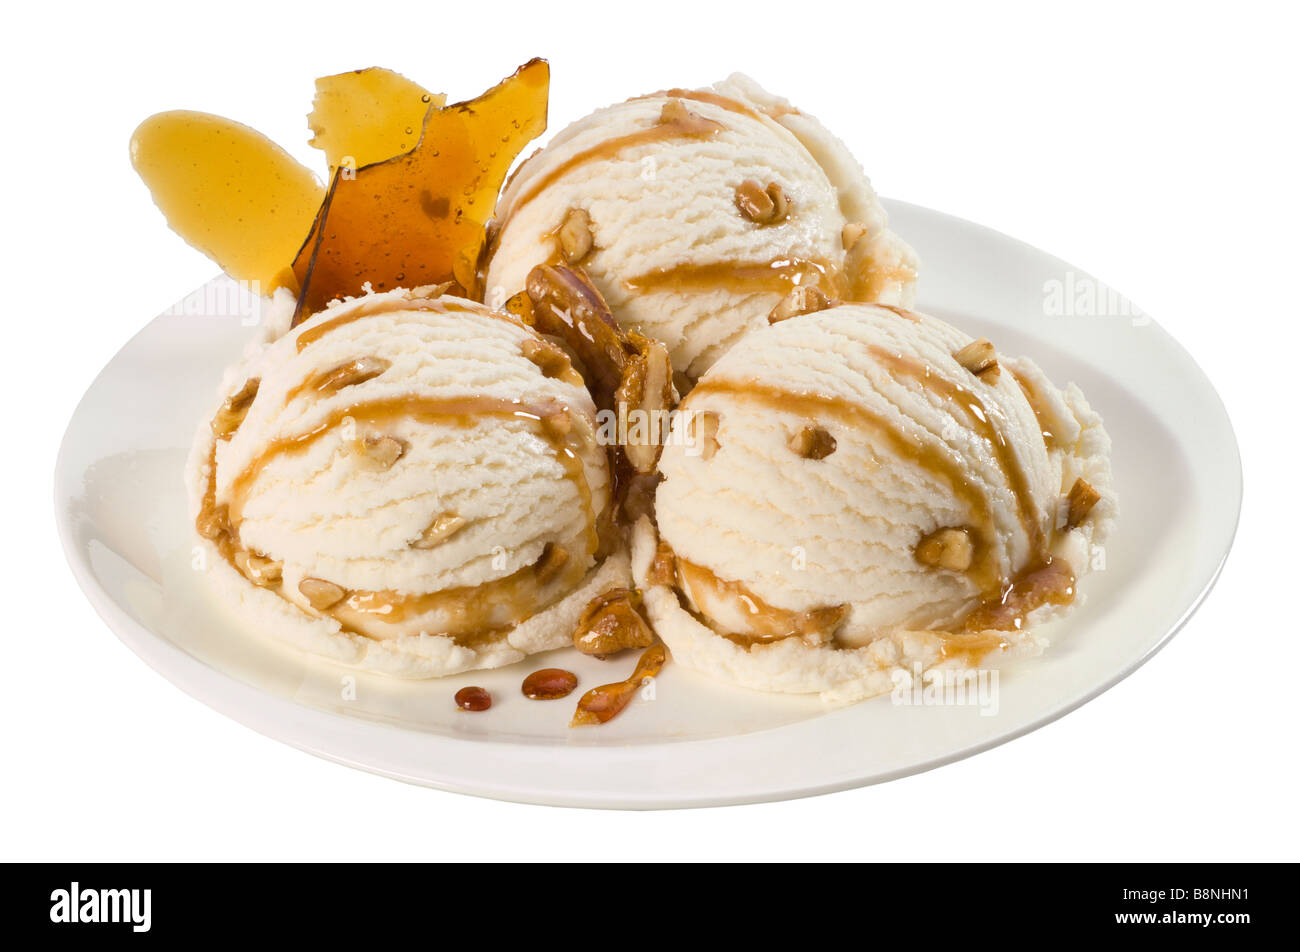 https://c8.alamy.com/comp/B8NHN1/three-vanilla-ice-cream-balls-with-caramel-syrup-B8NHN1.jpg